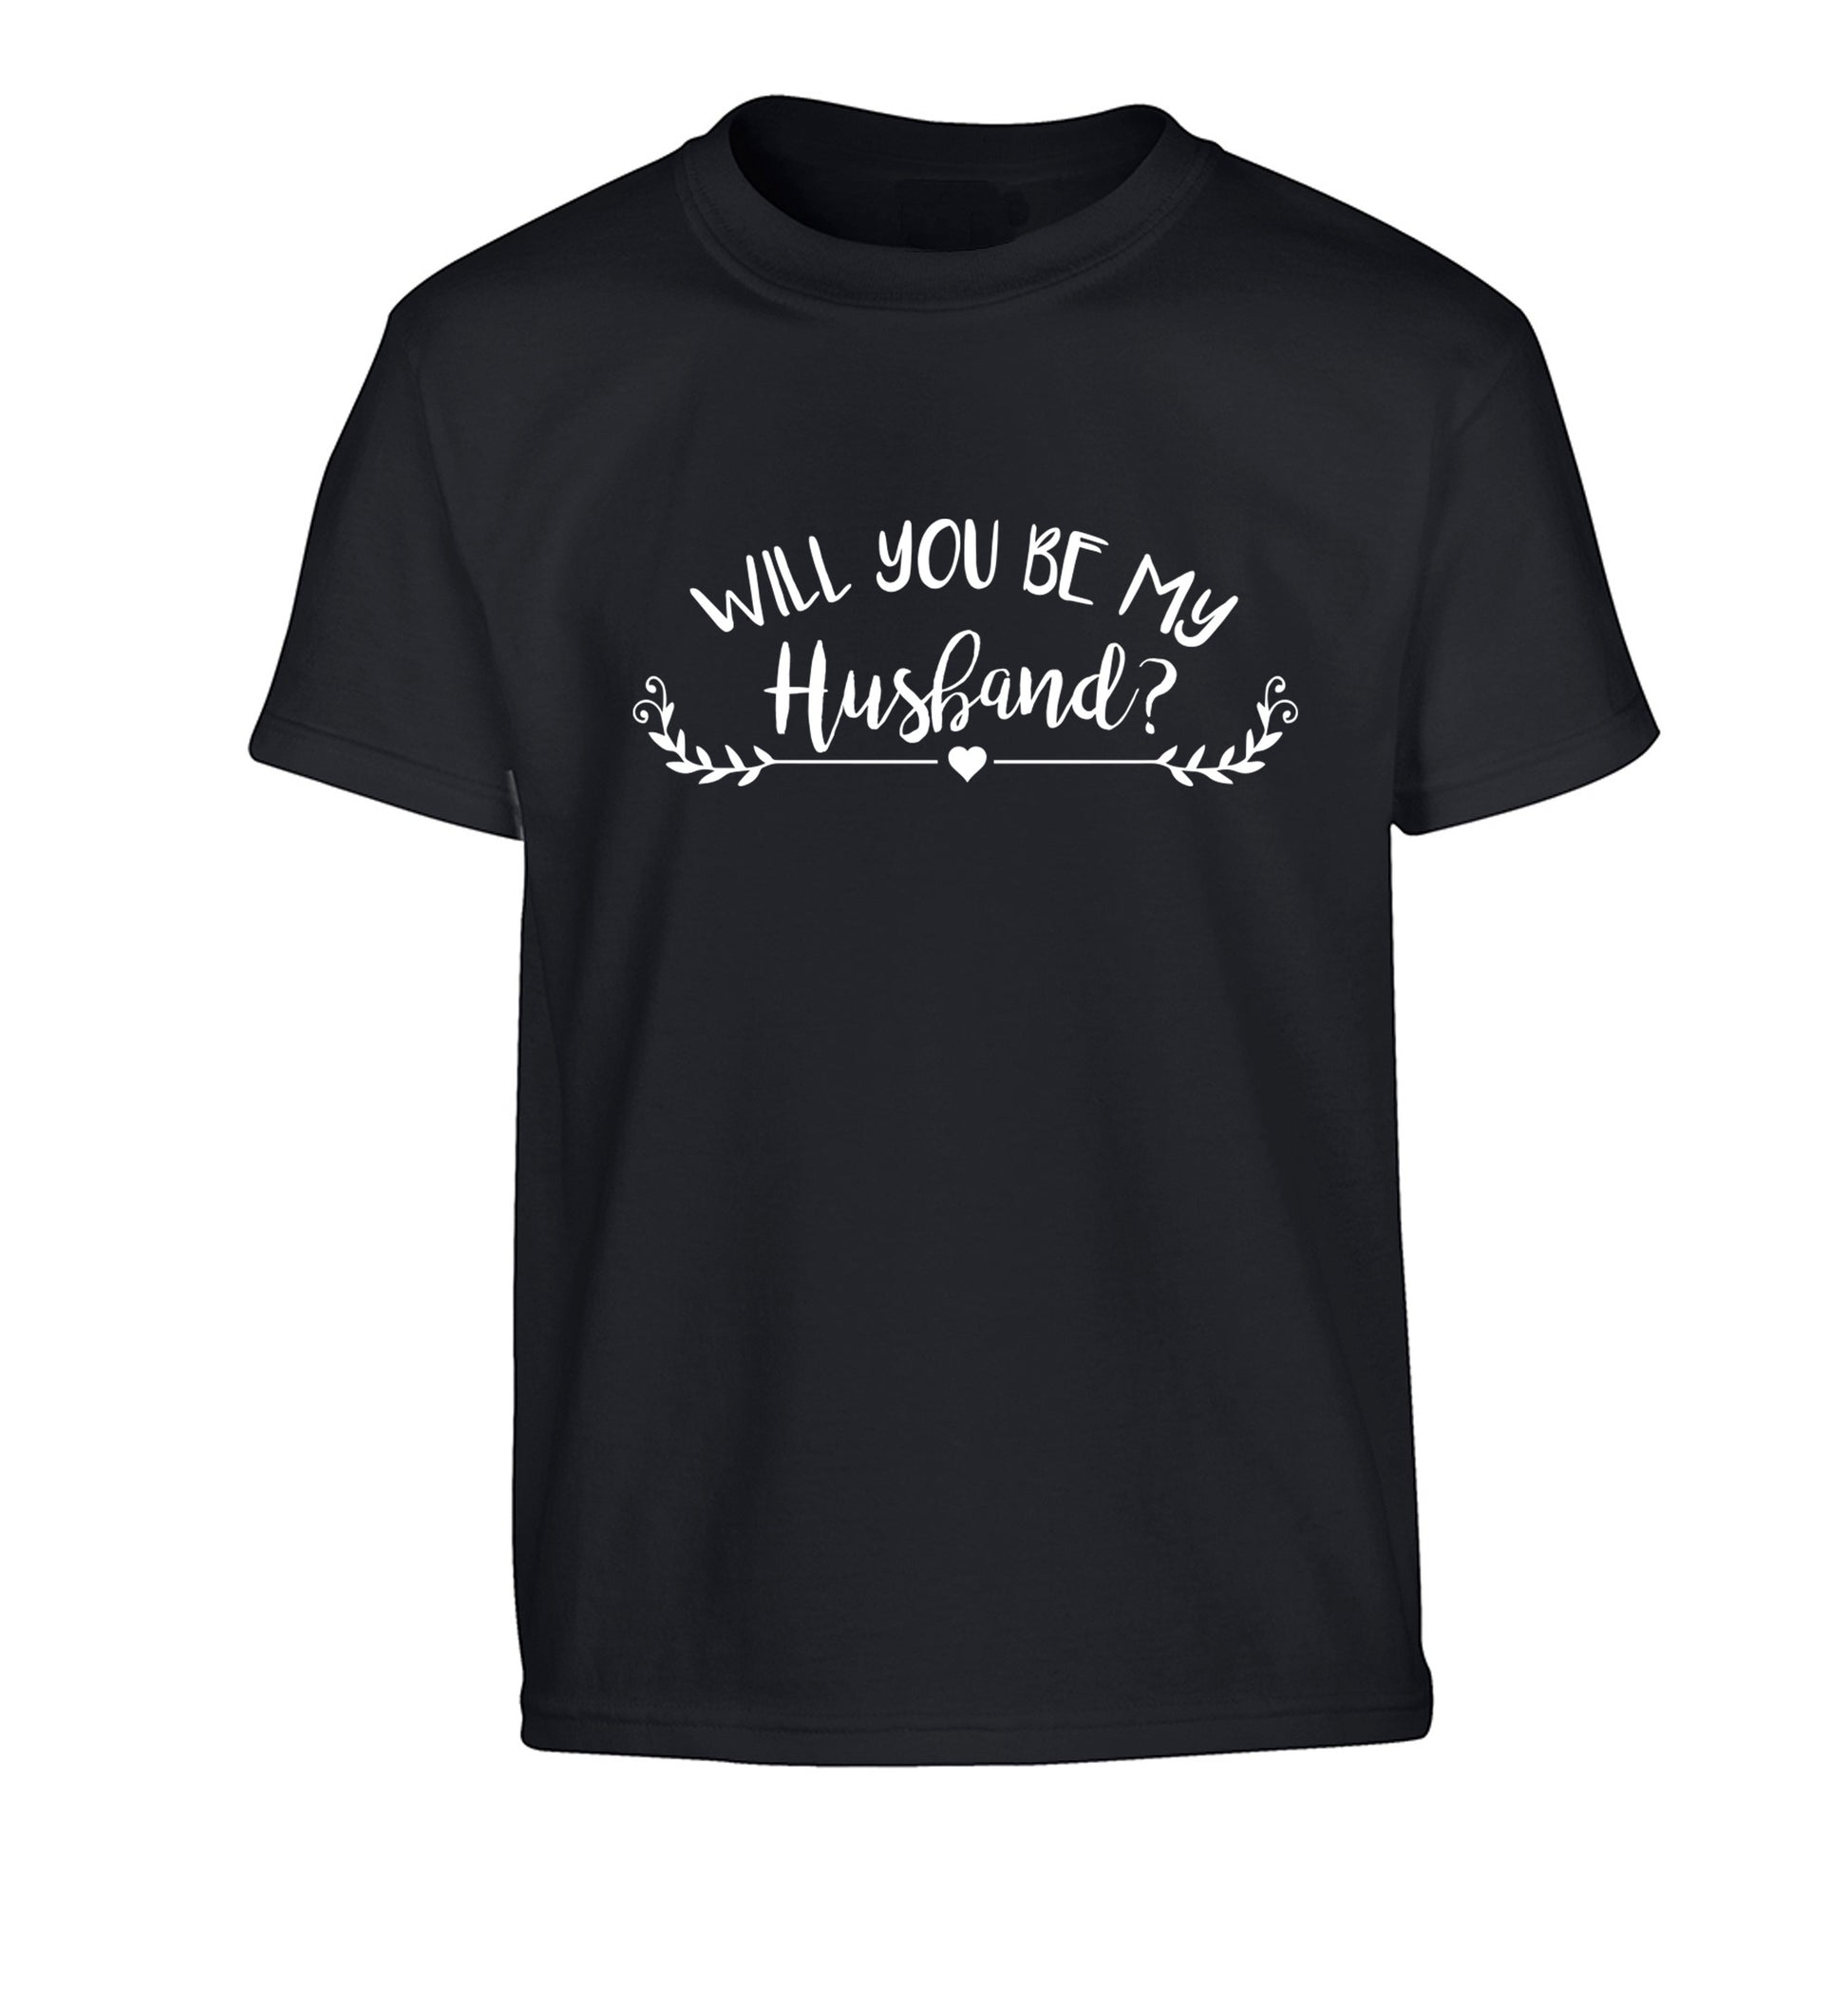 Will you be my husband? Children's black Tshirt 12-14 Years